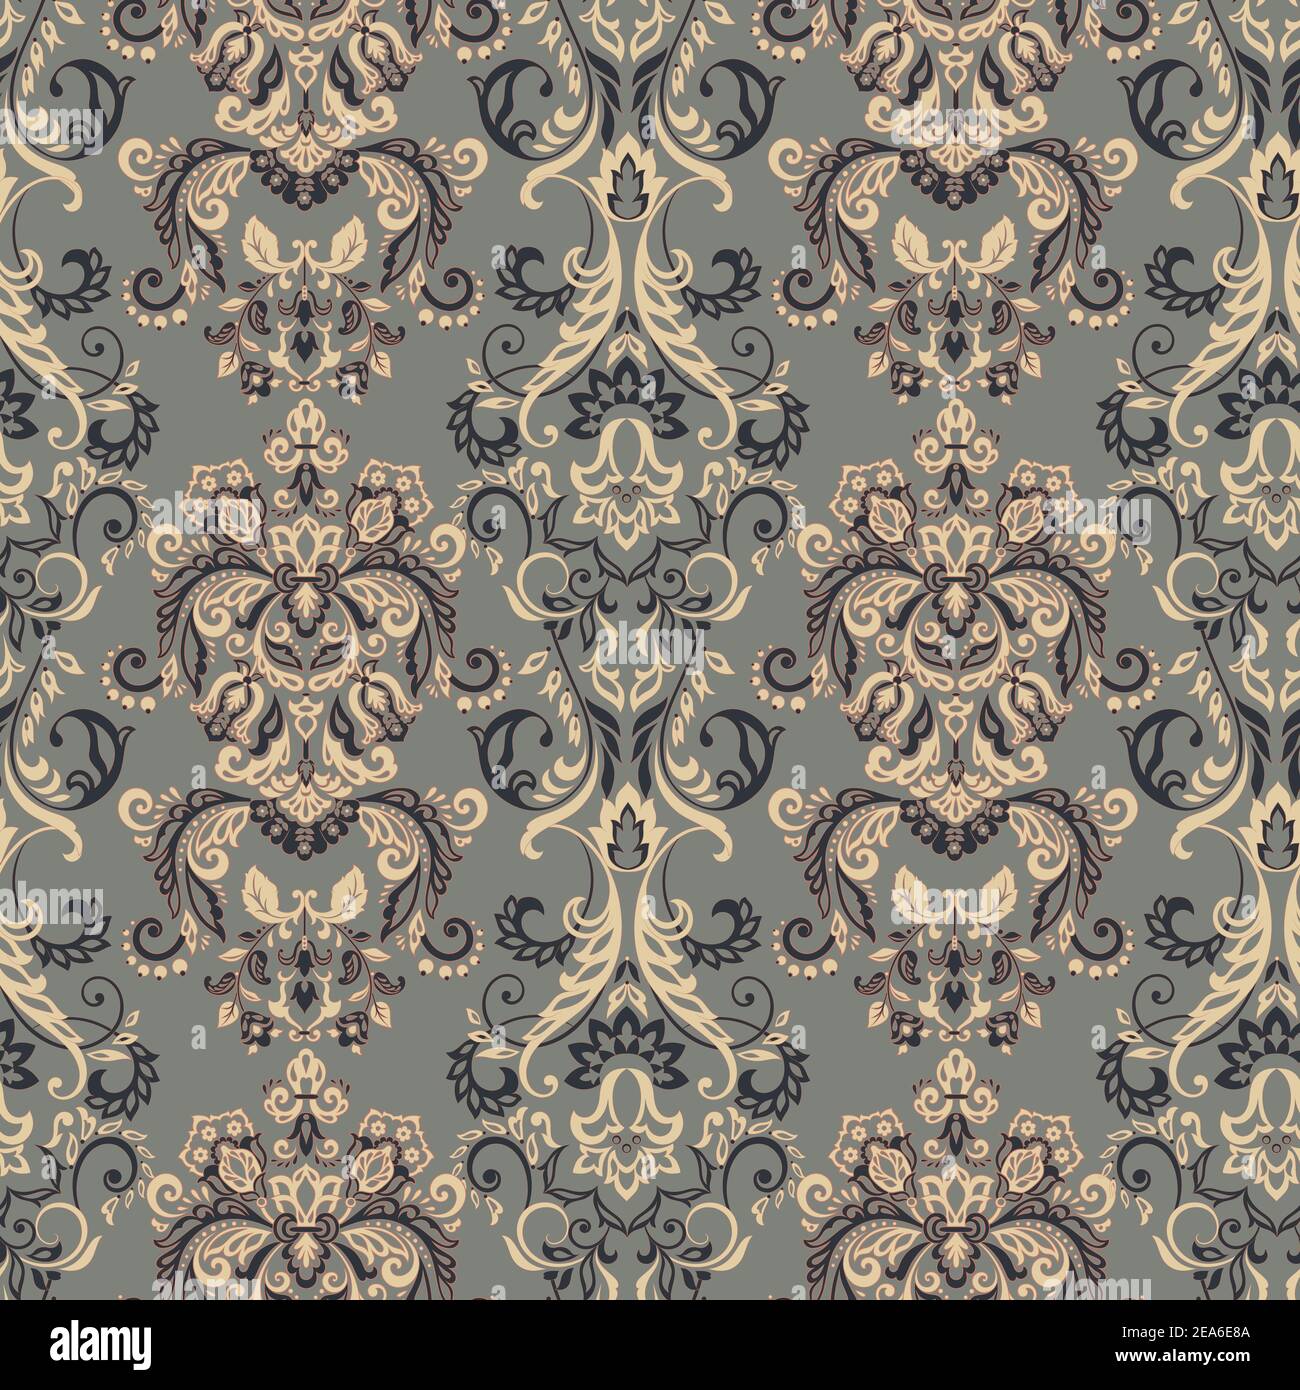 Vector Baroque floral pattern. classic floral ornament. vintage